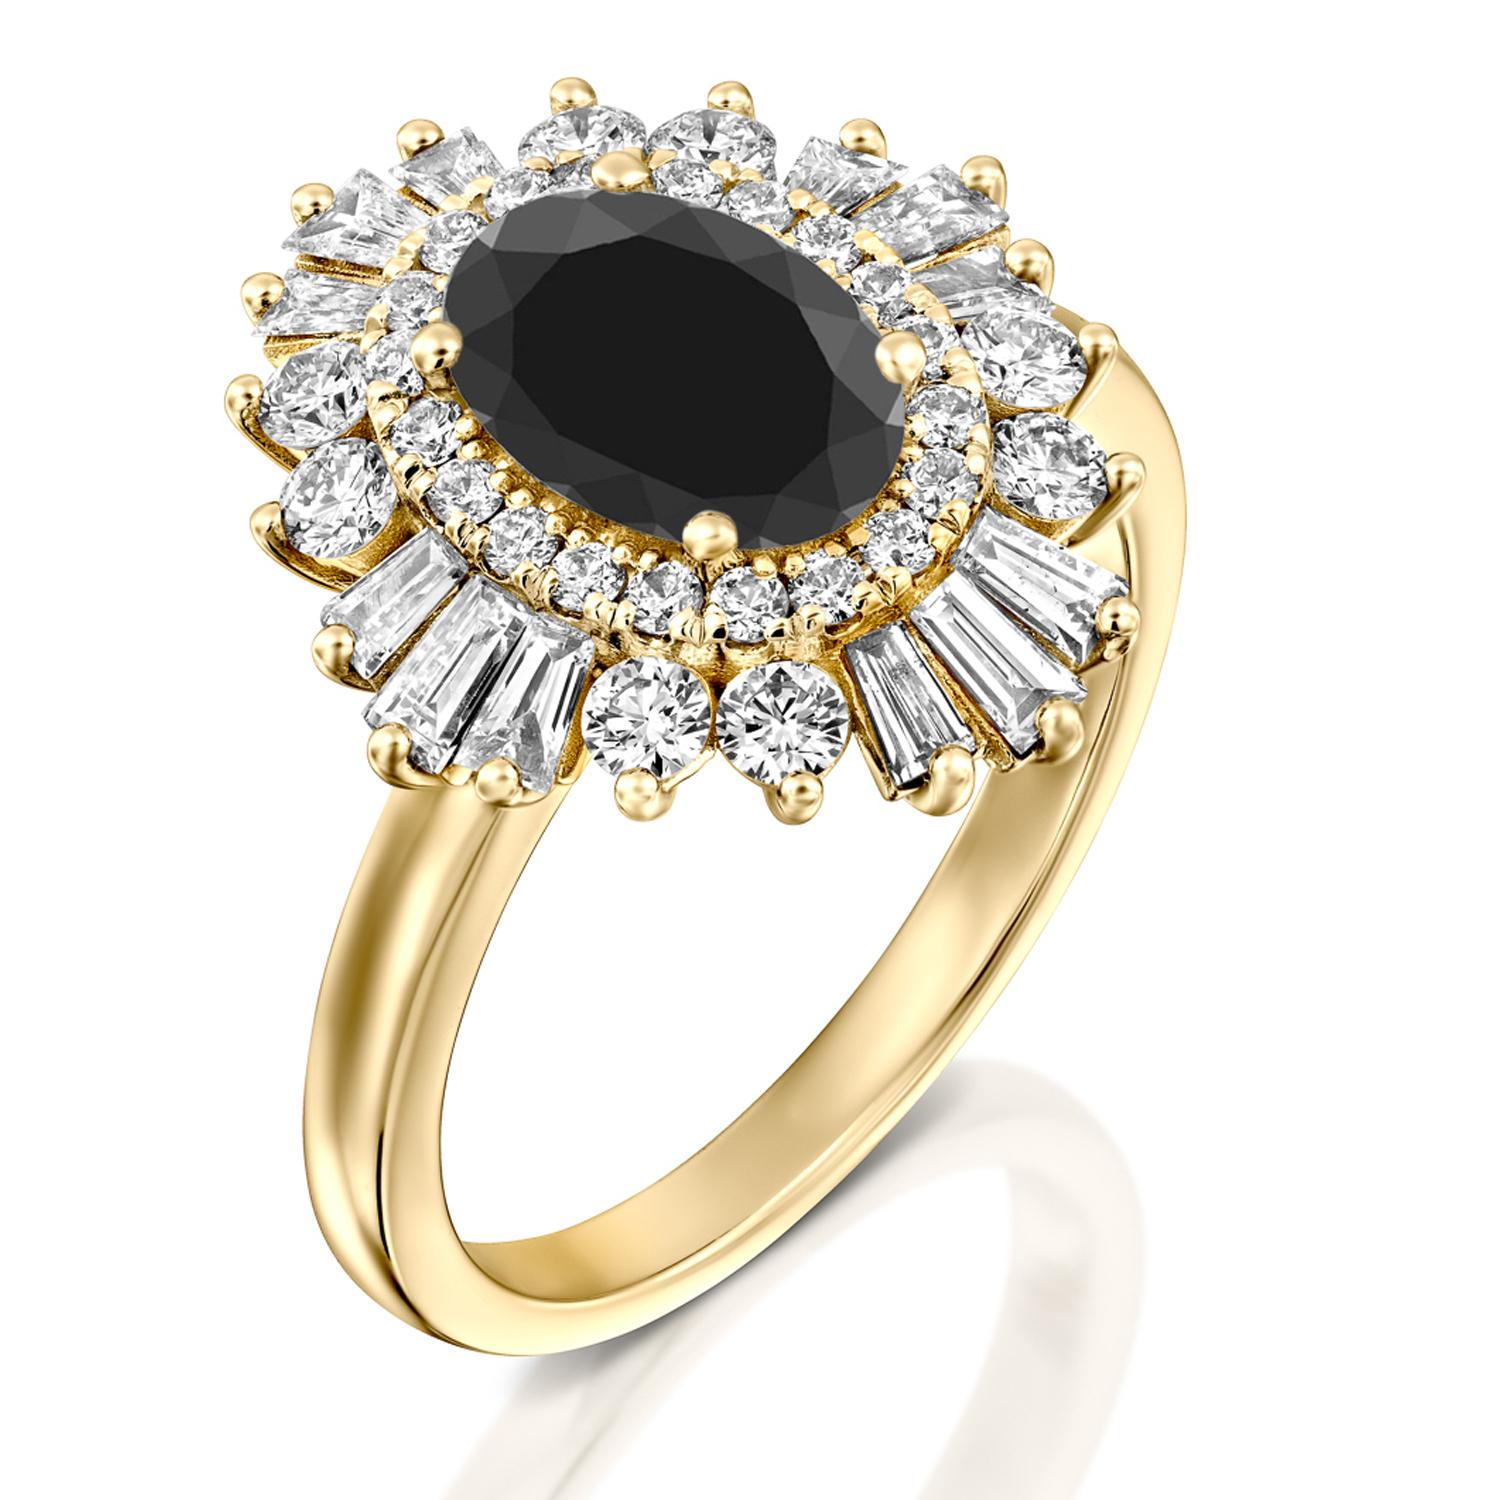 3 carat black diamond engagement rings